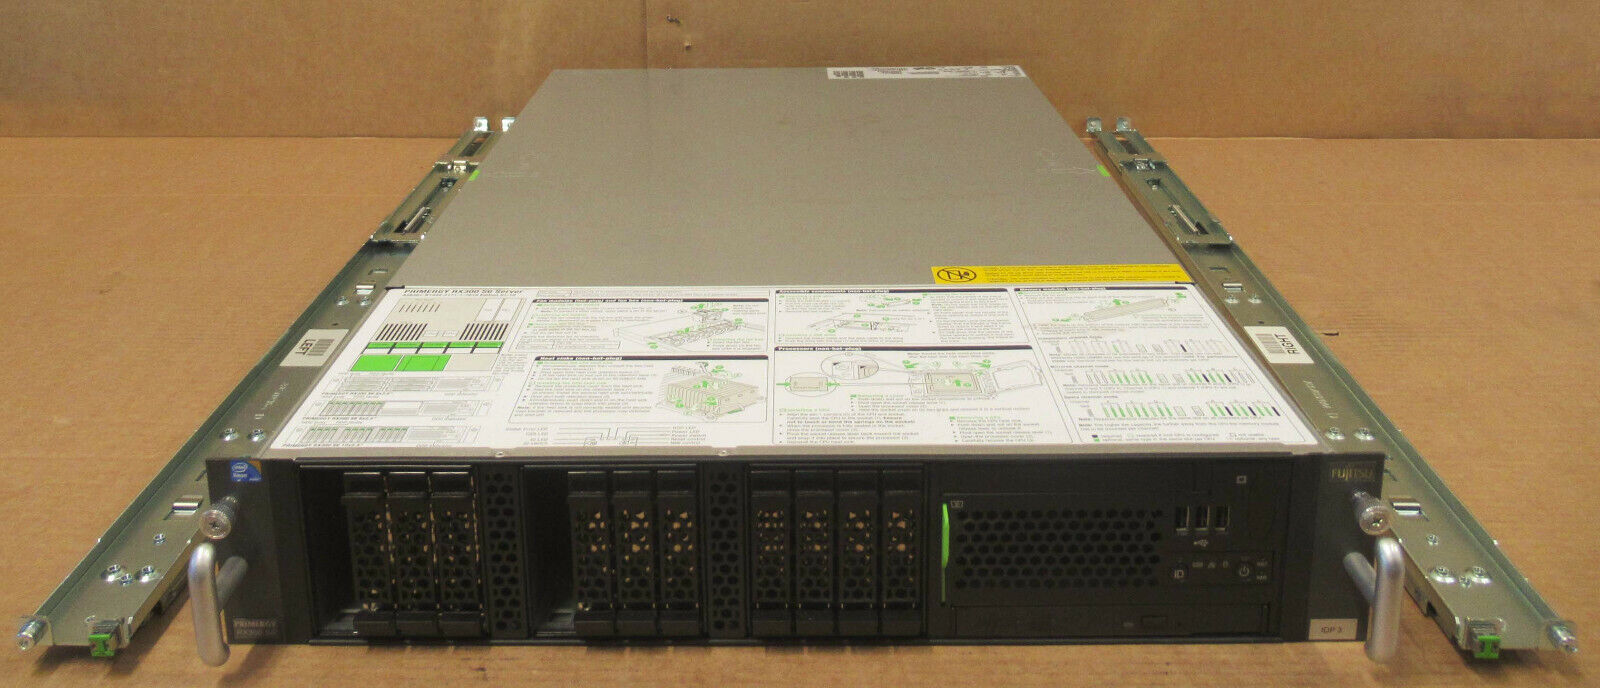 Fujitsu Primergy RX300 S6 1x E5630 2.53GHz 8GB Ram RAID 12xBay 3xLPE12002 Server